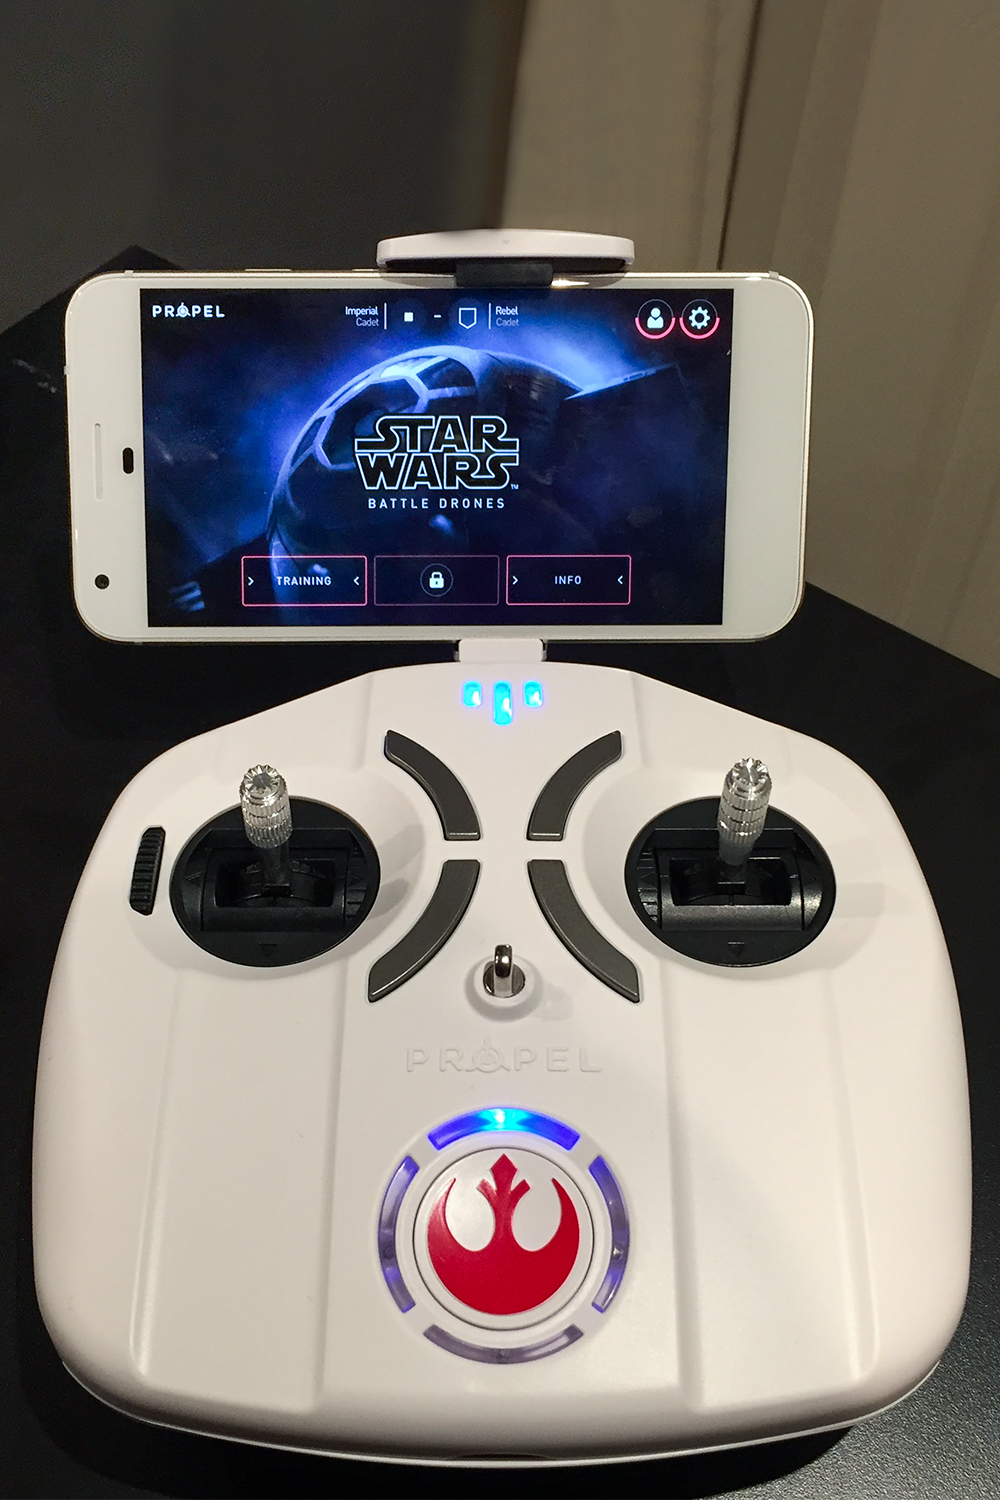 Star Wars Propel Battle Drones Shop Display Demo Video Screen Rare Collectible 